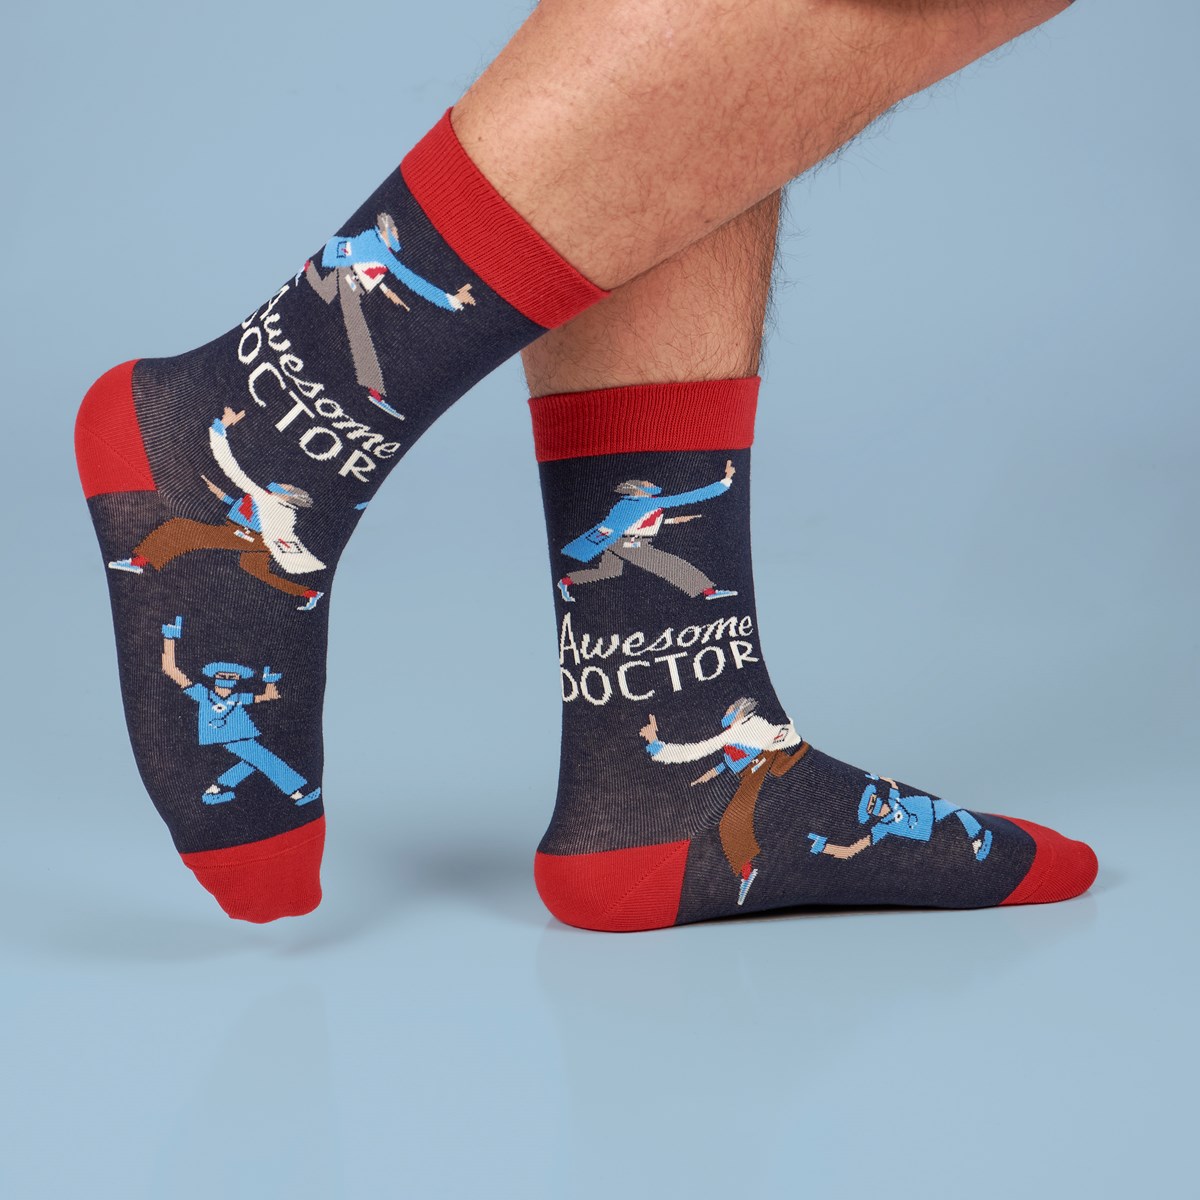 Awesome Doctor Socks - Cotton, Nylon, Spandex